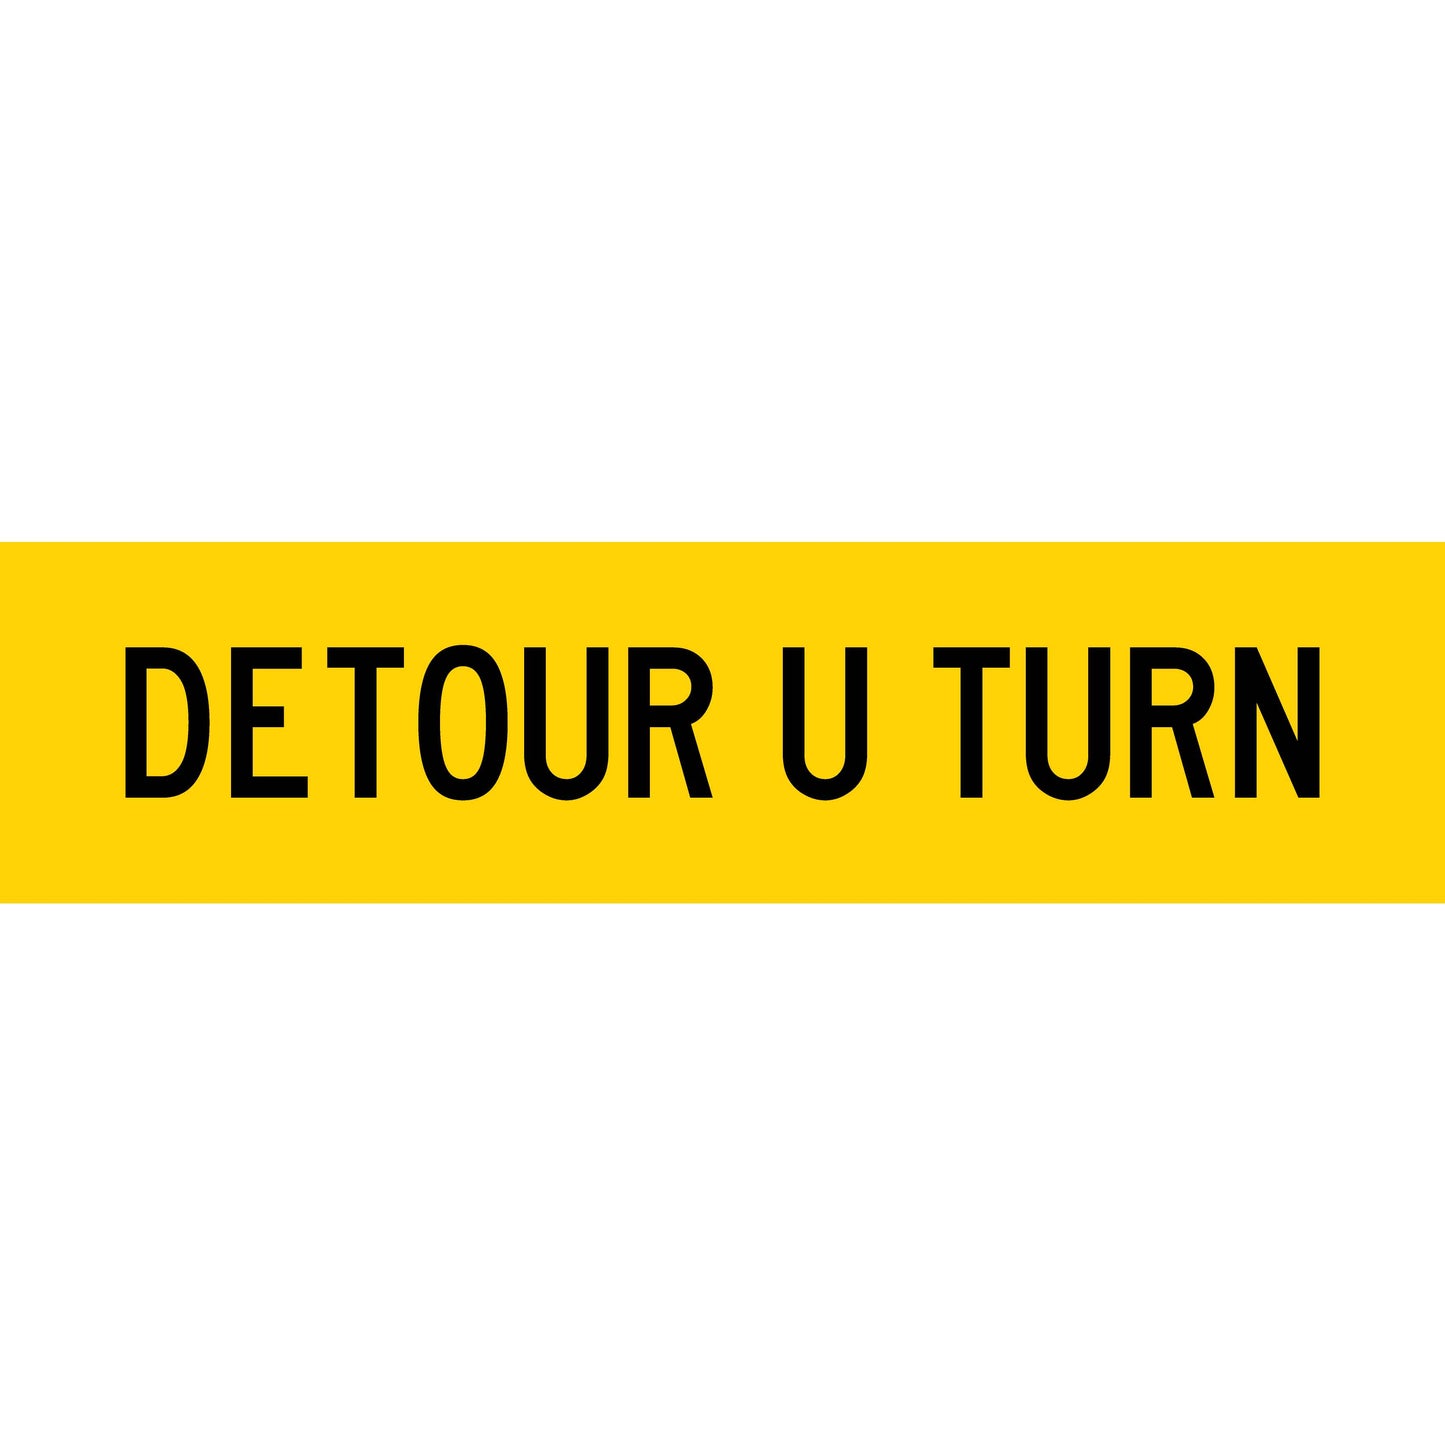 Detour U Turn Long Skinny Multi Message Reflective Traffic Sign